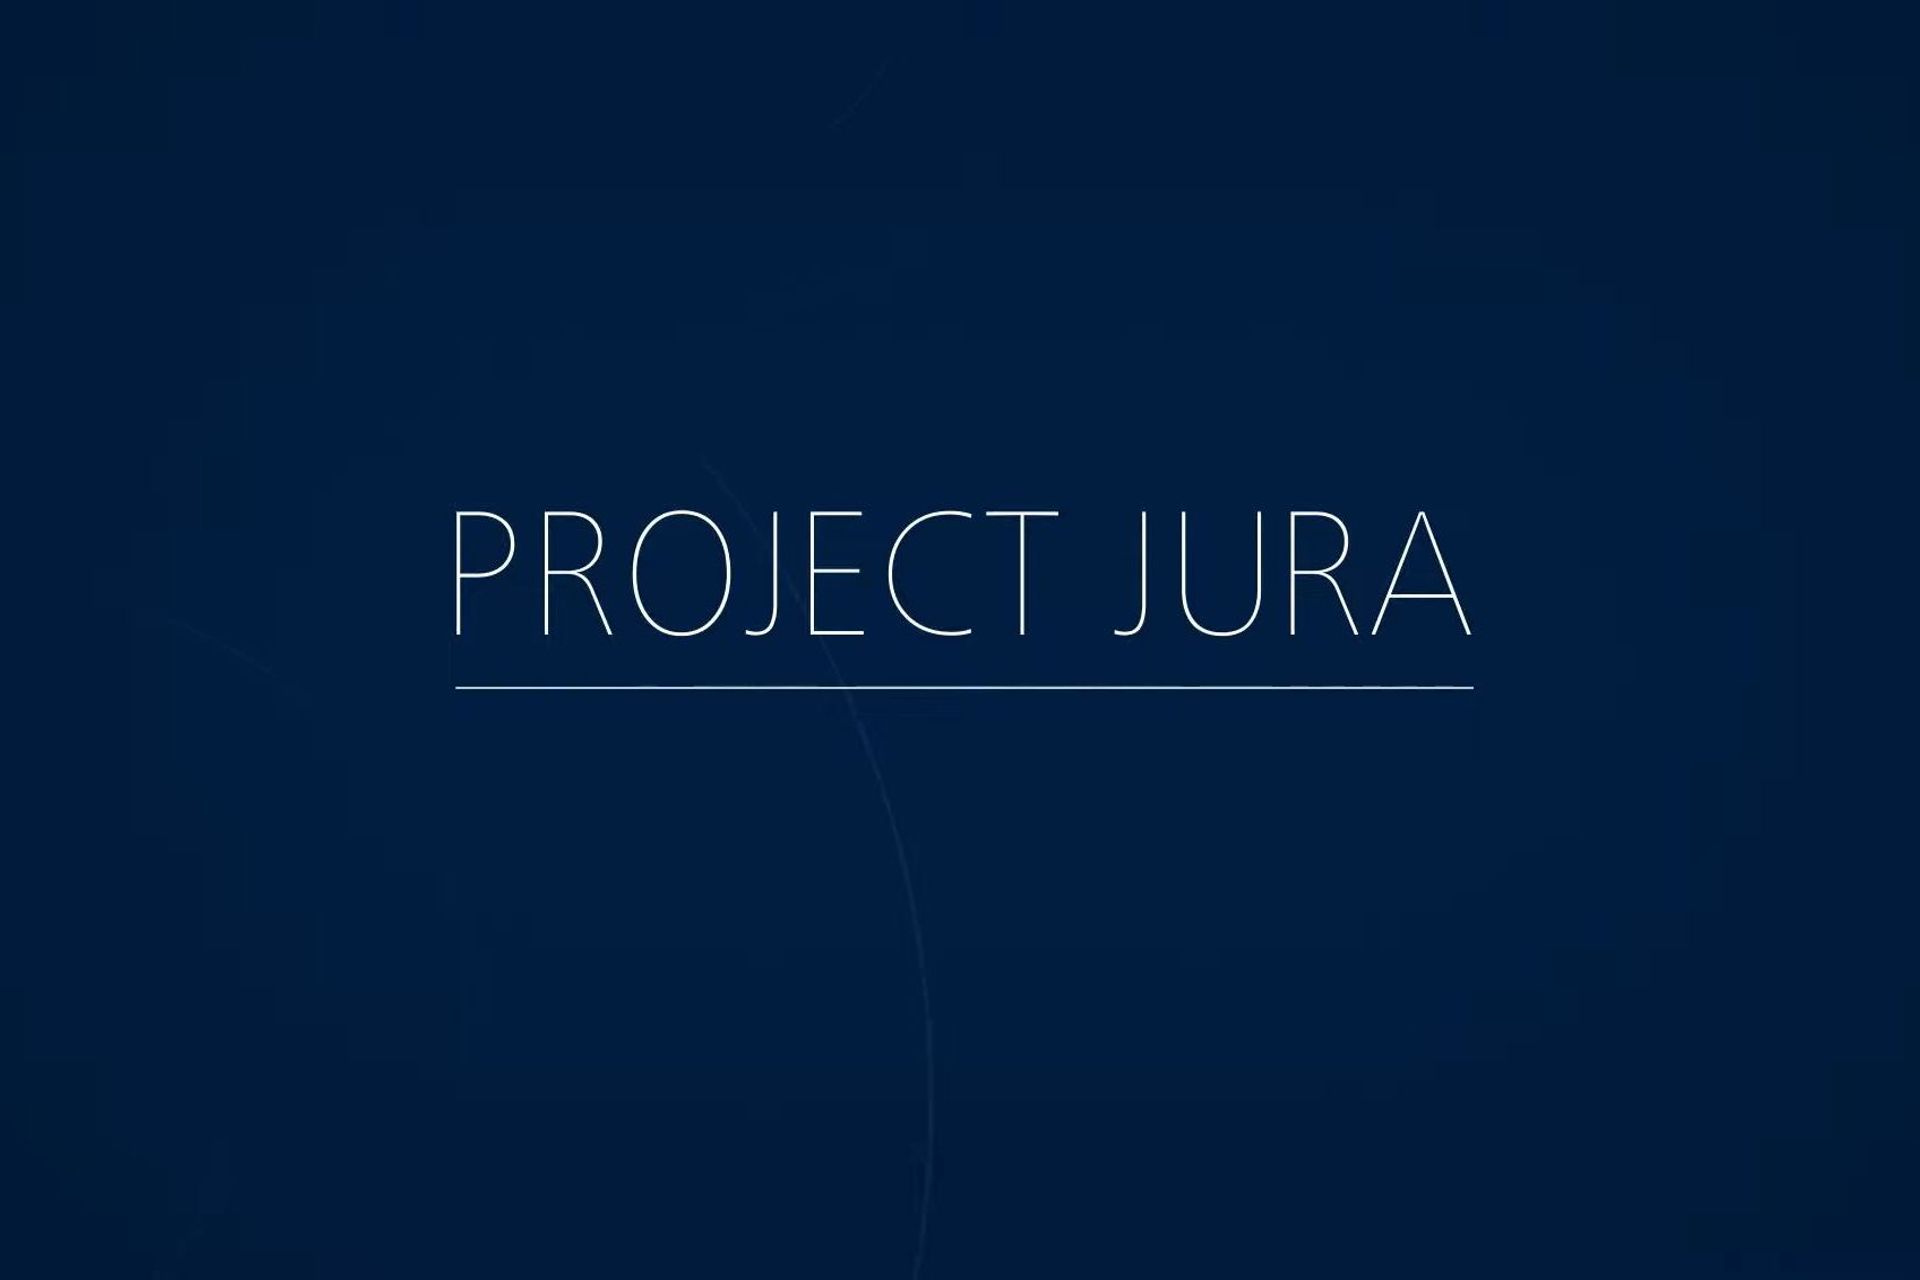 Swiss National Bank, Banque de France ve BIS Innovation Hub tarafından uygulanan "Project Jura" logosu